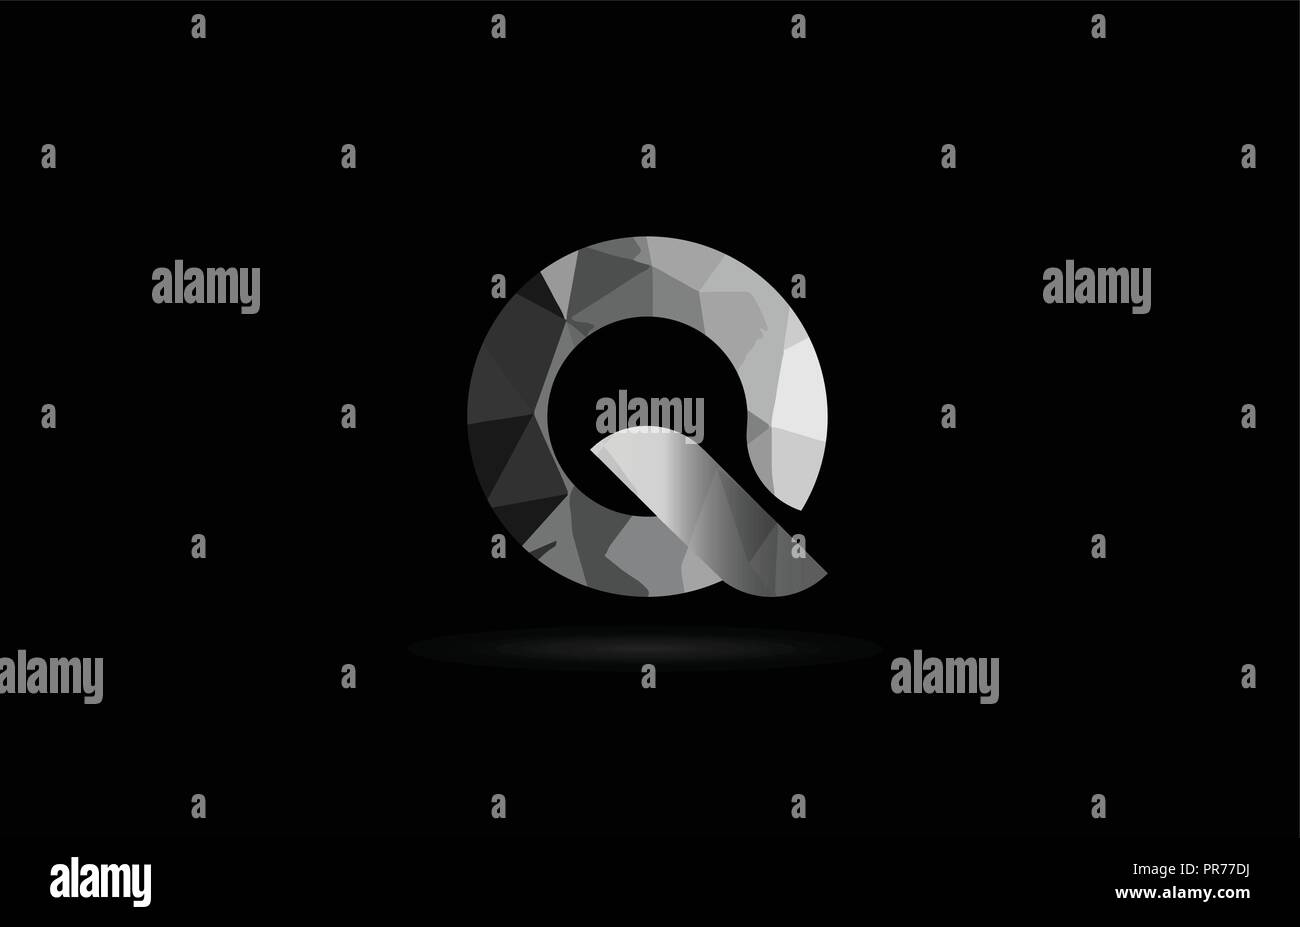 Black And White Alphabet Letter Q Logo Design Suitable For A Company